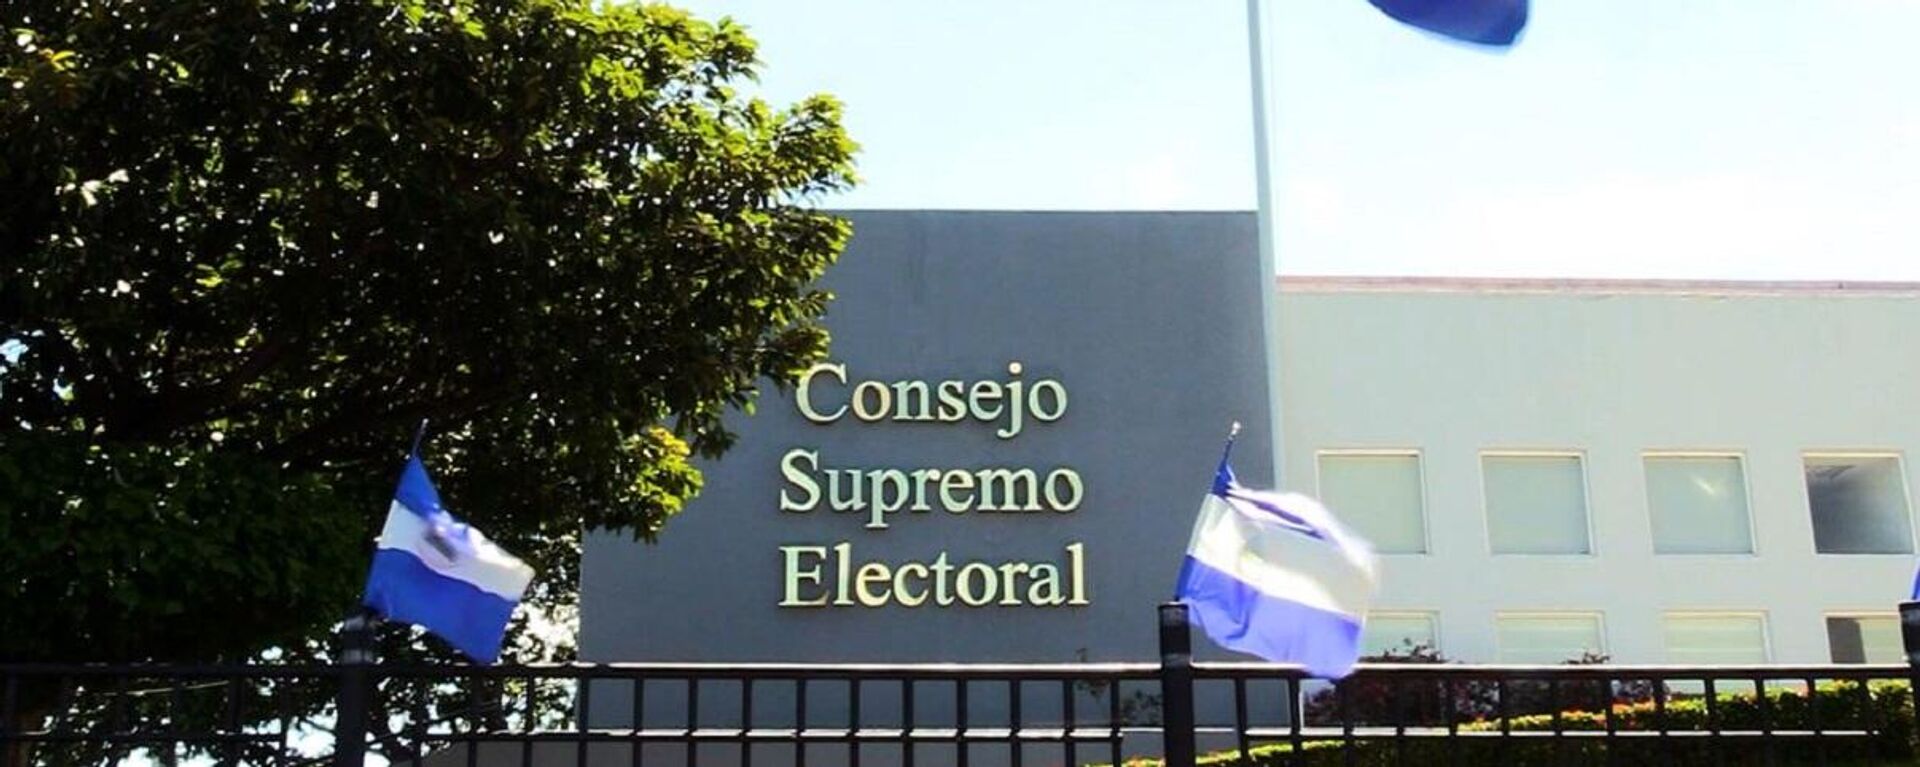 Consejo Supremo Electoral de Nicaragua - Sputnik Mundo, 1920, 05.11.2021